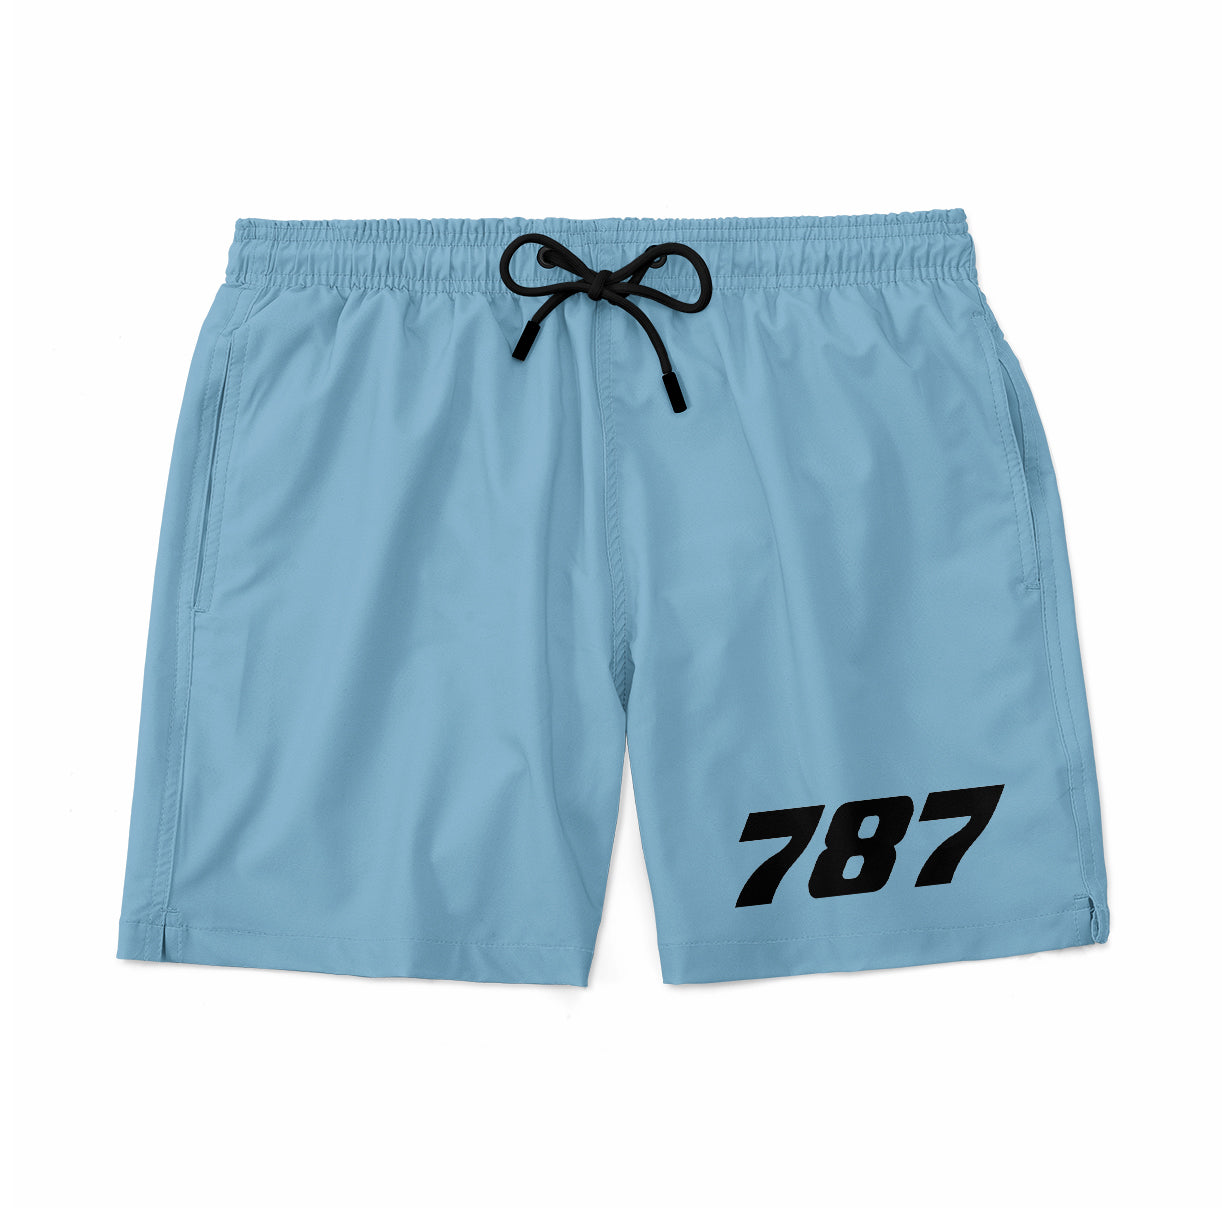 787 Flat Text Designed Swim Trunks & Shorts